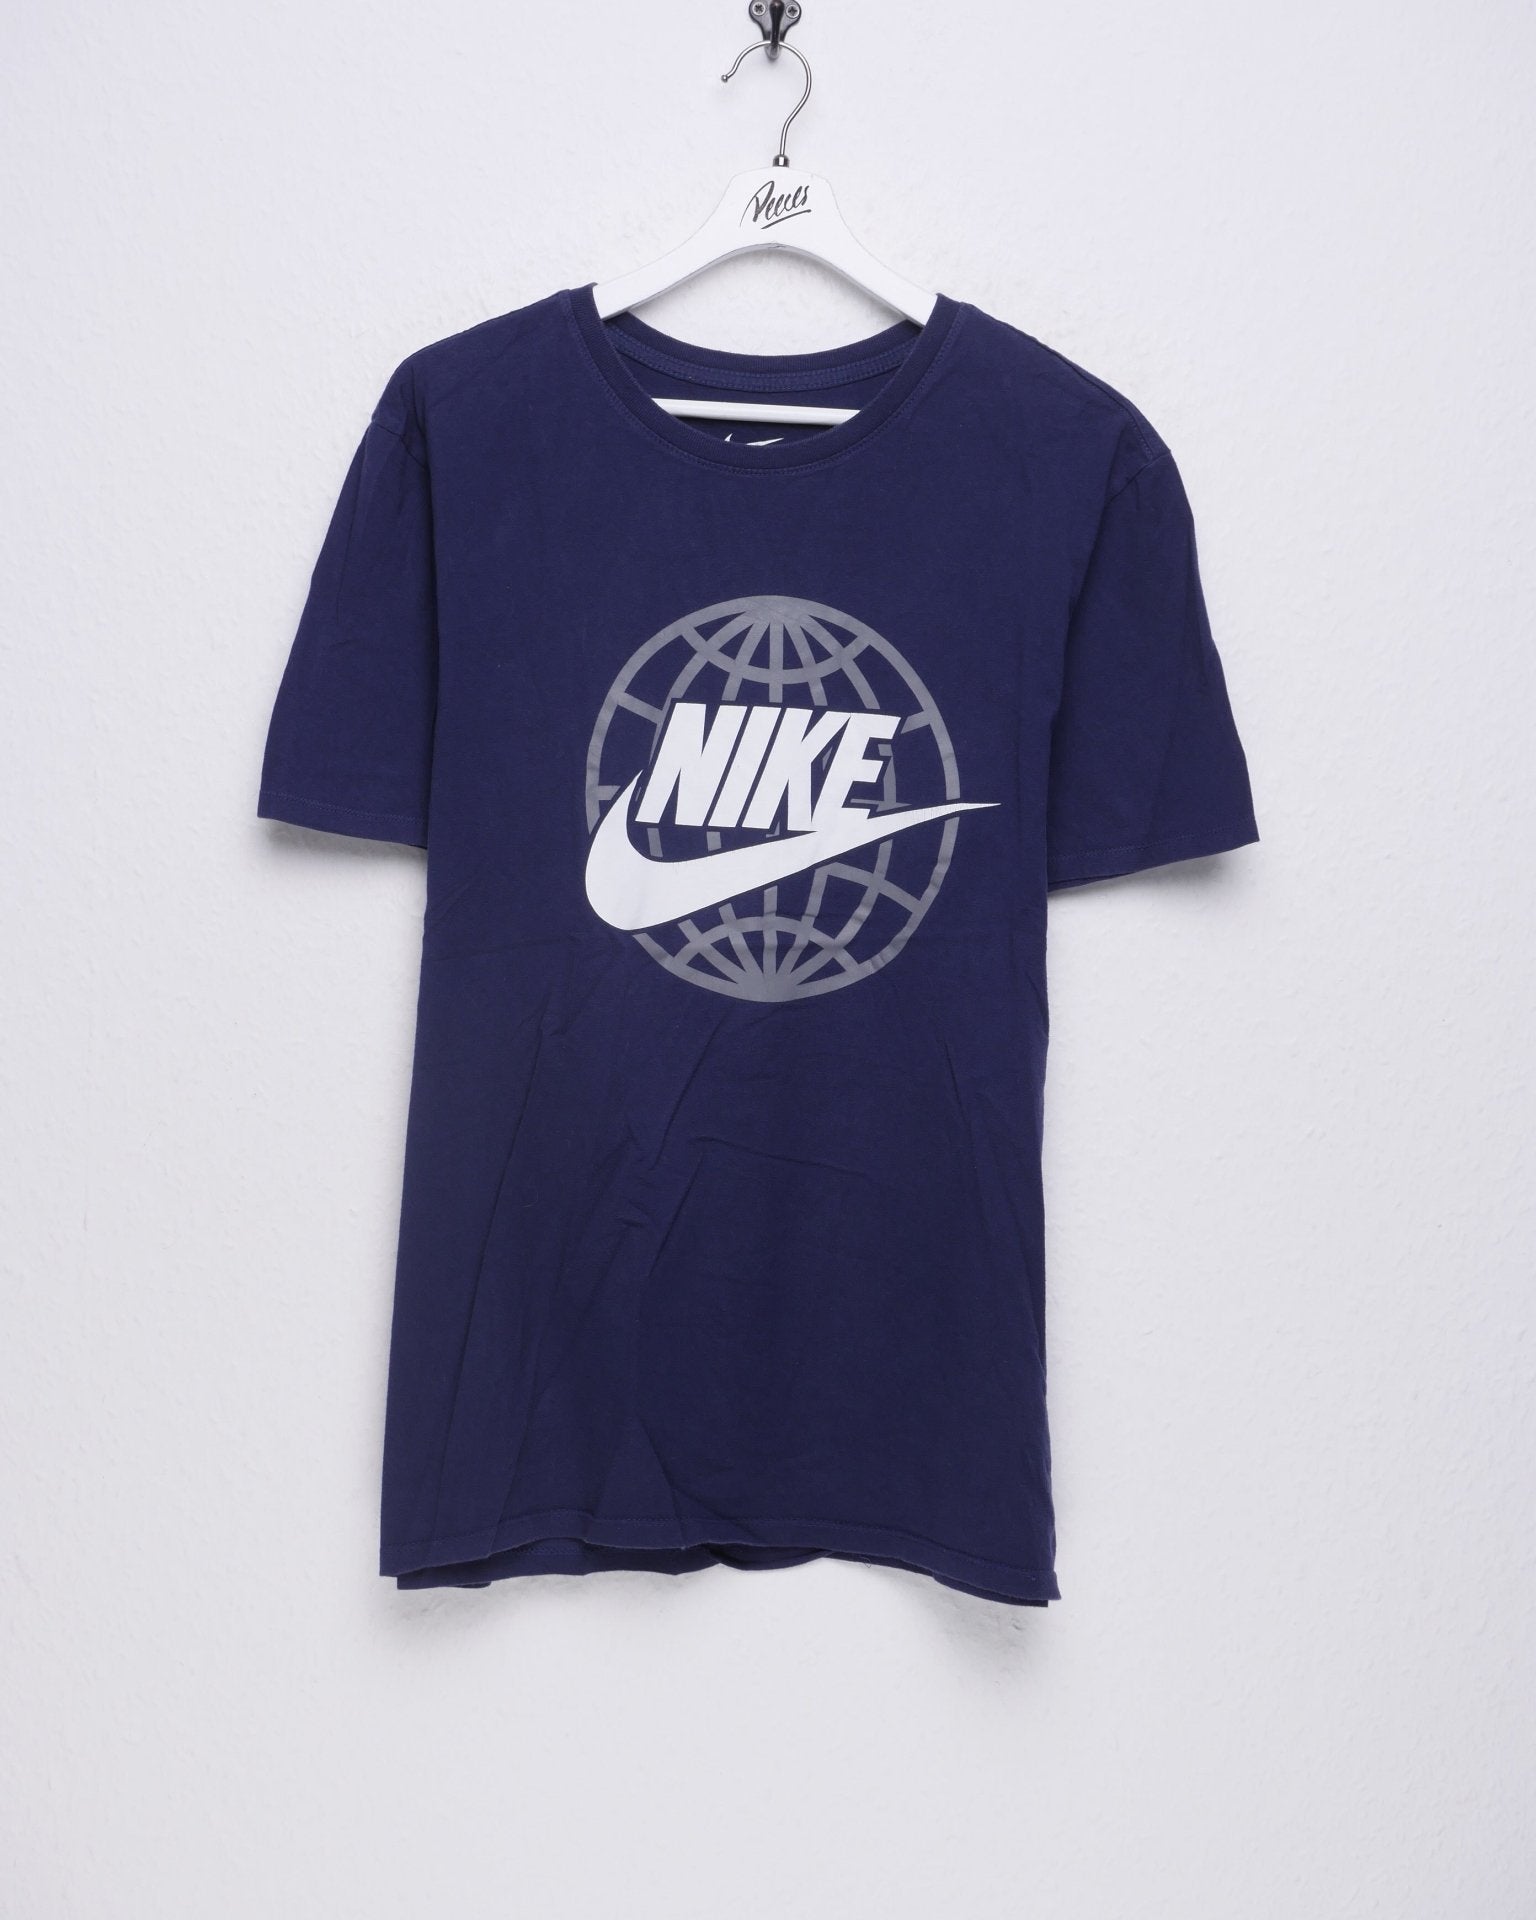 Nike printed Big Logo navy Shirt - Peeces